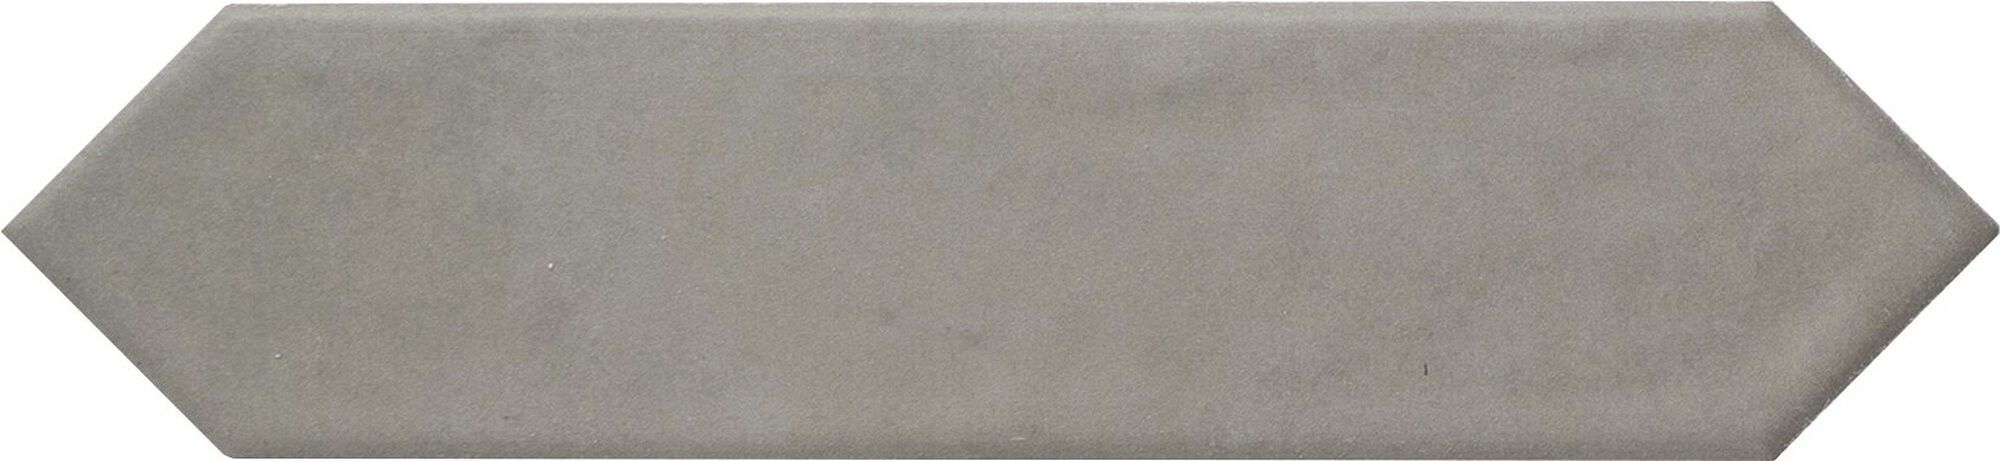 Picket Contemporary Mineral Grey 6x26